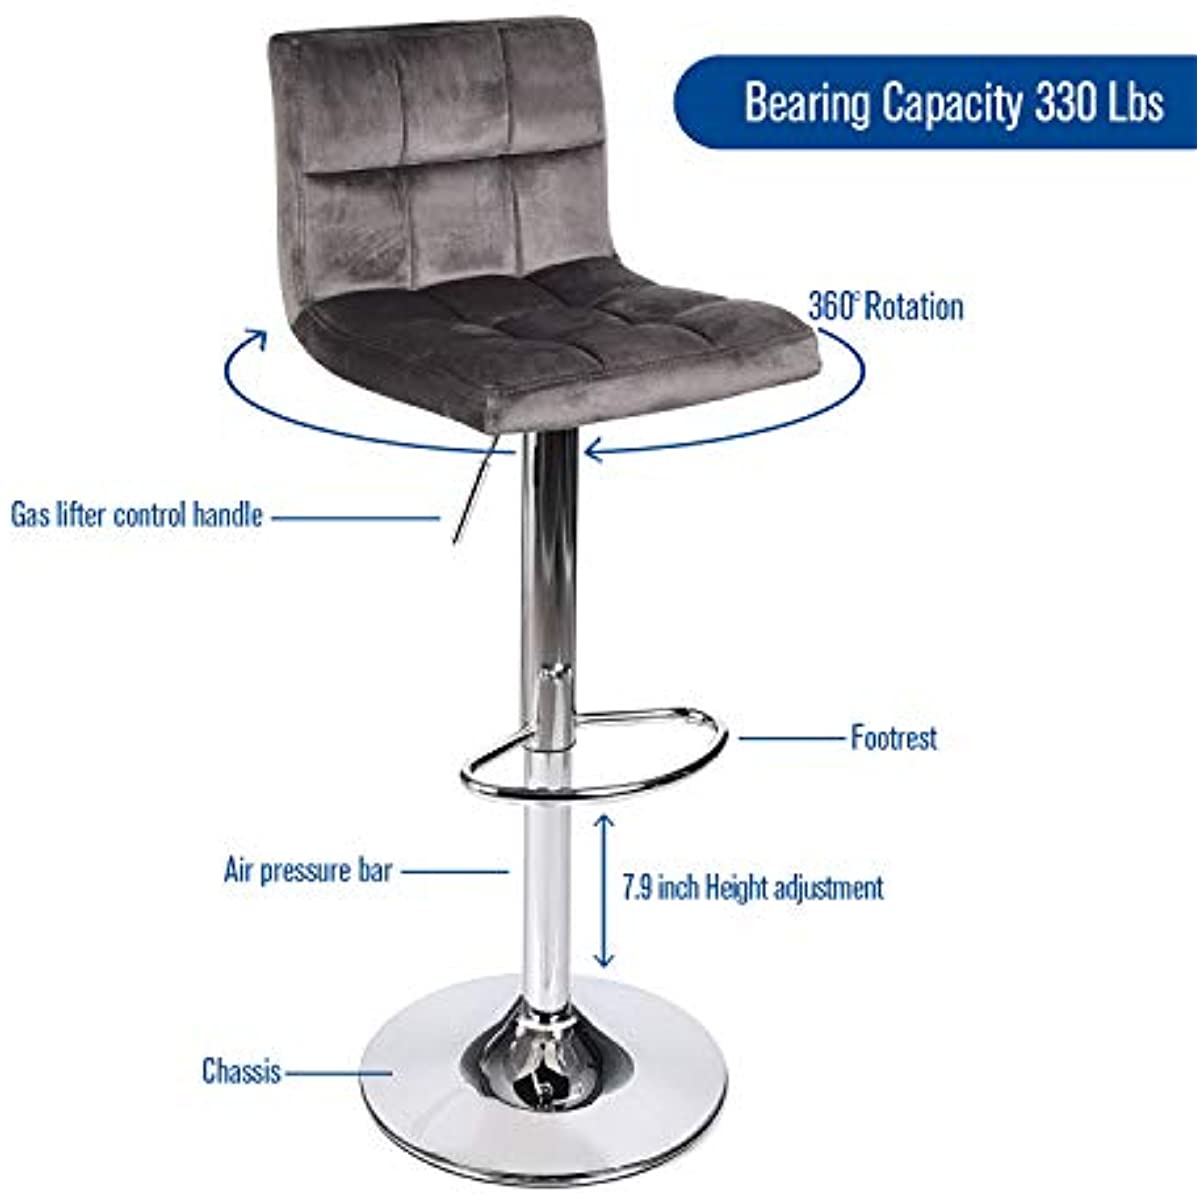 Grey velvet fabric armless bar stools descriptions